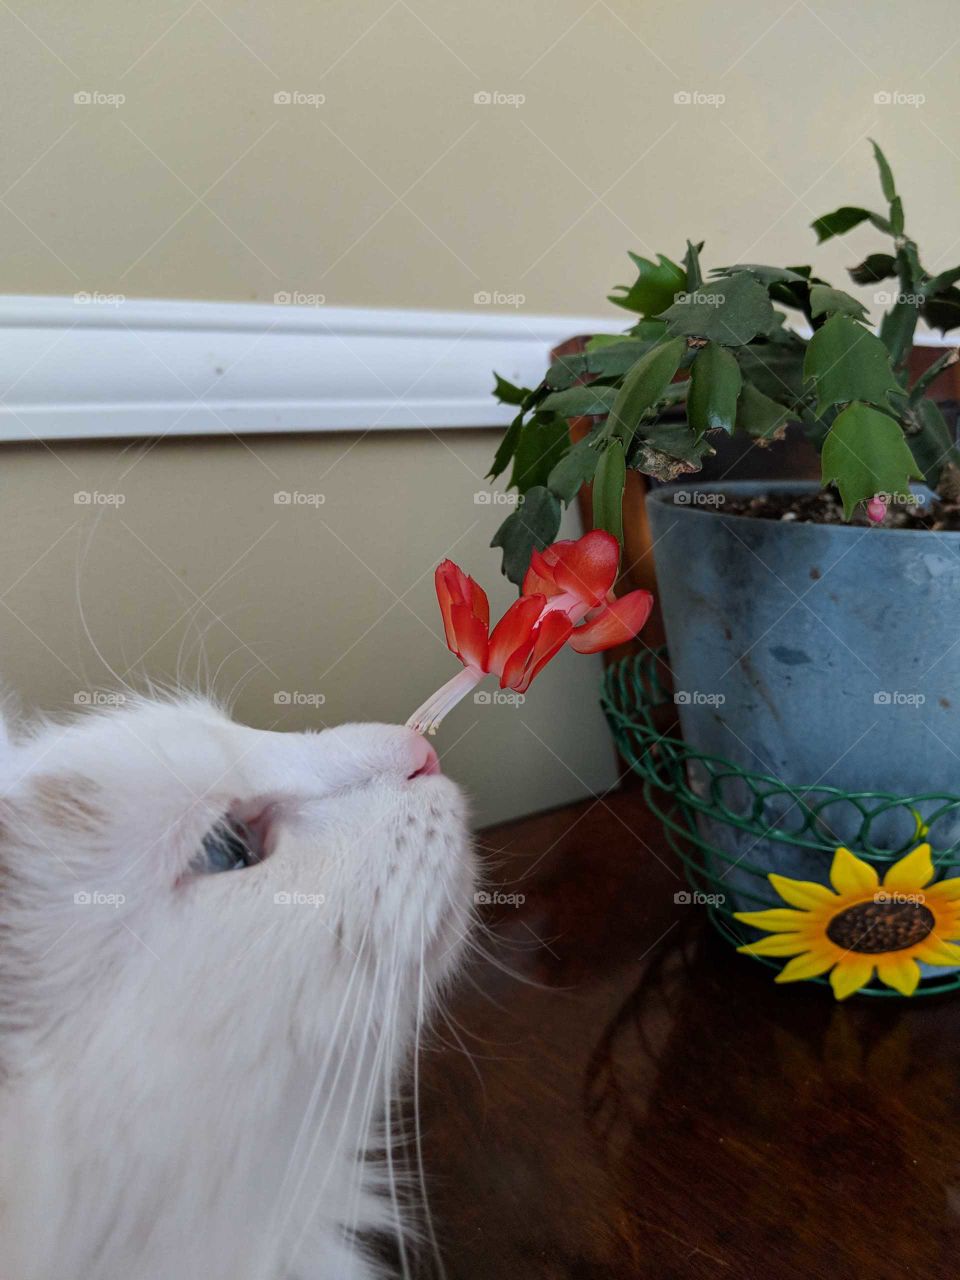 Kitty cat curiosity...